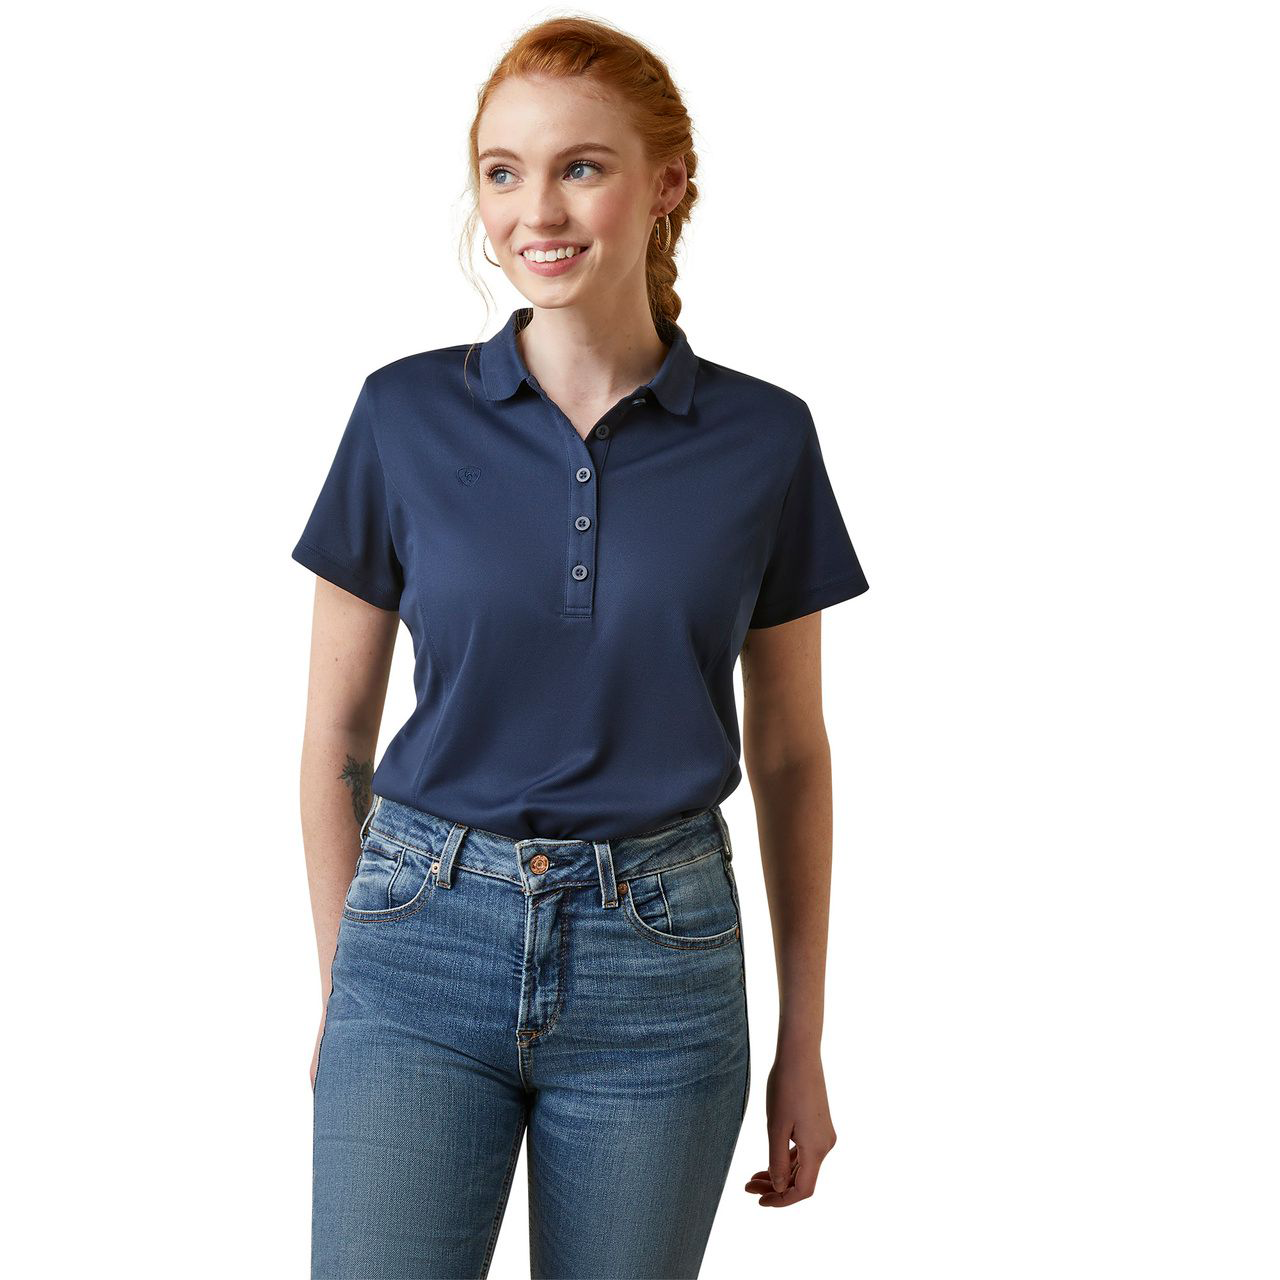 Ariat TEK Short-Sleeve Polo for Ladies - Navy - XS